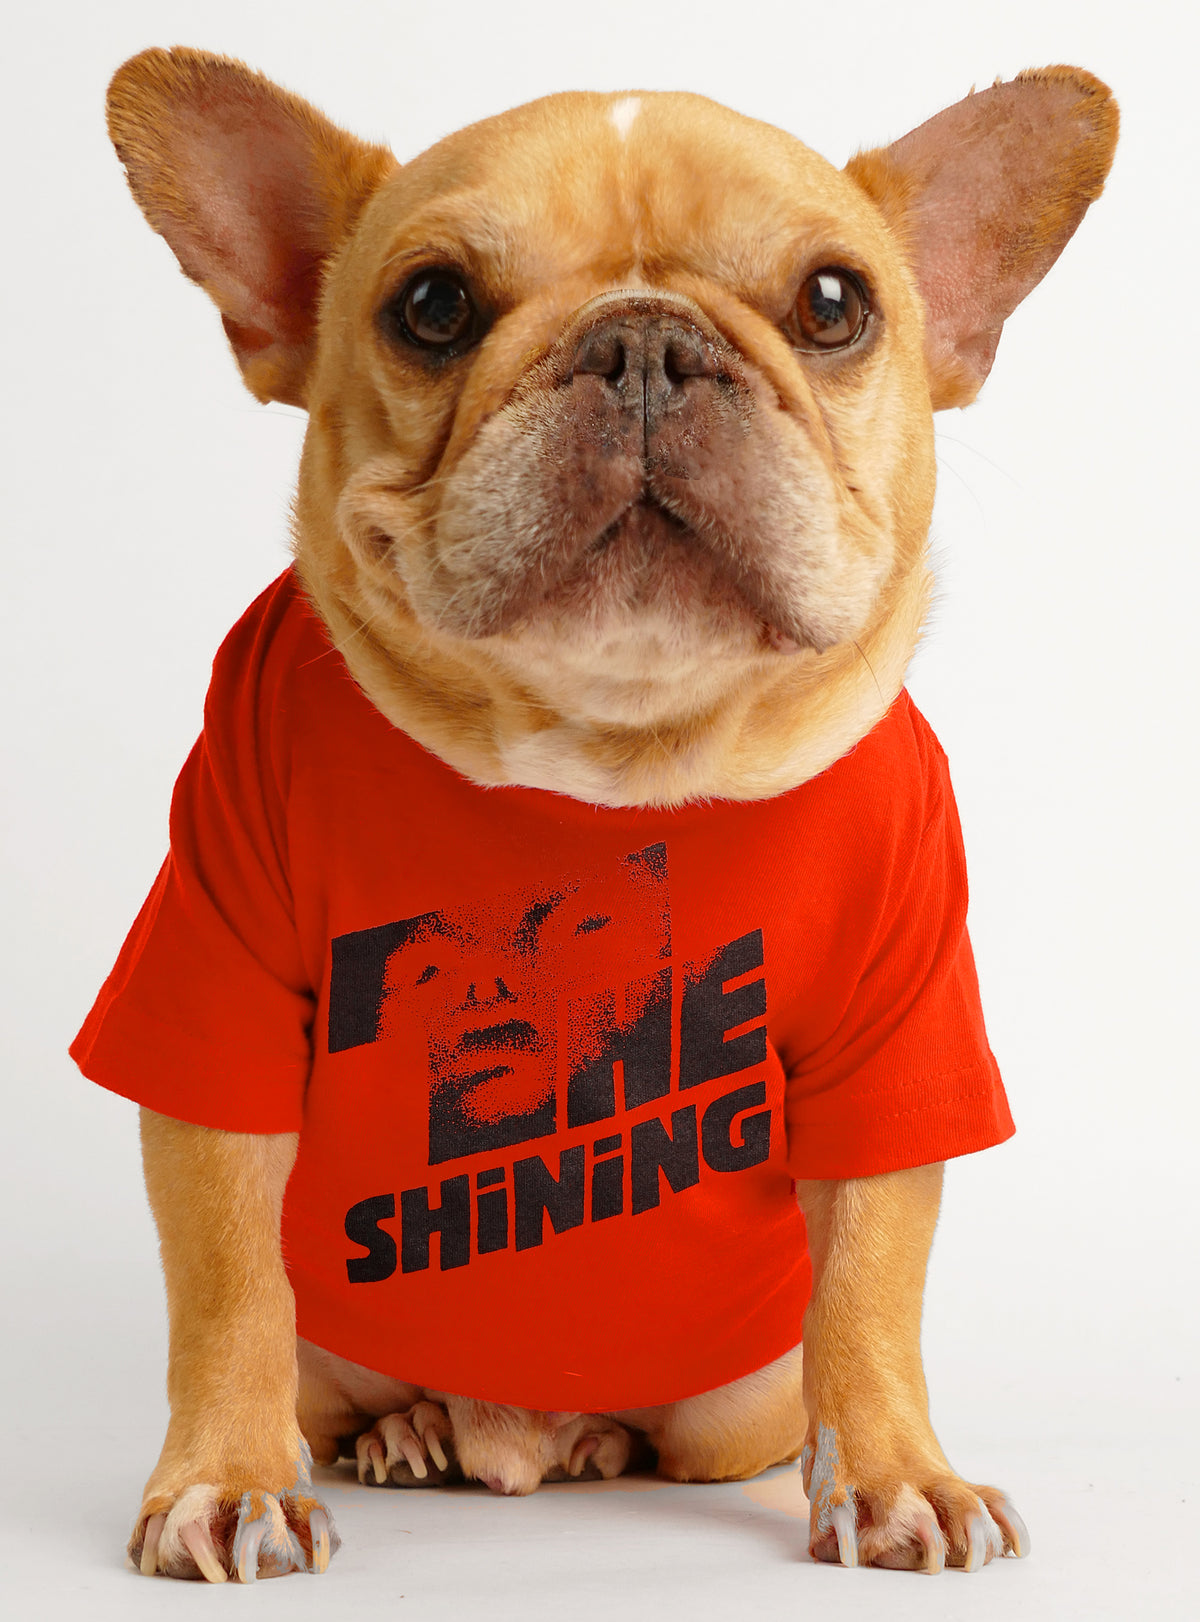 The Shining Dog Tee